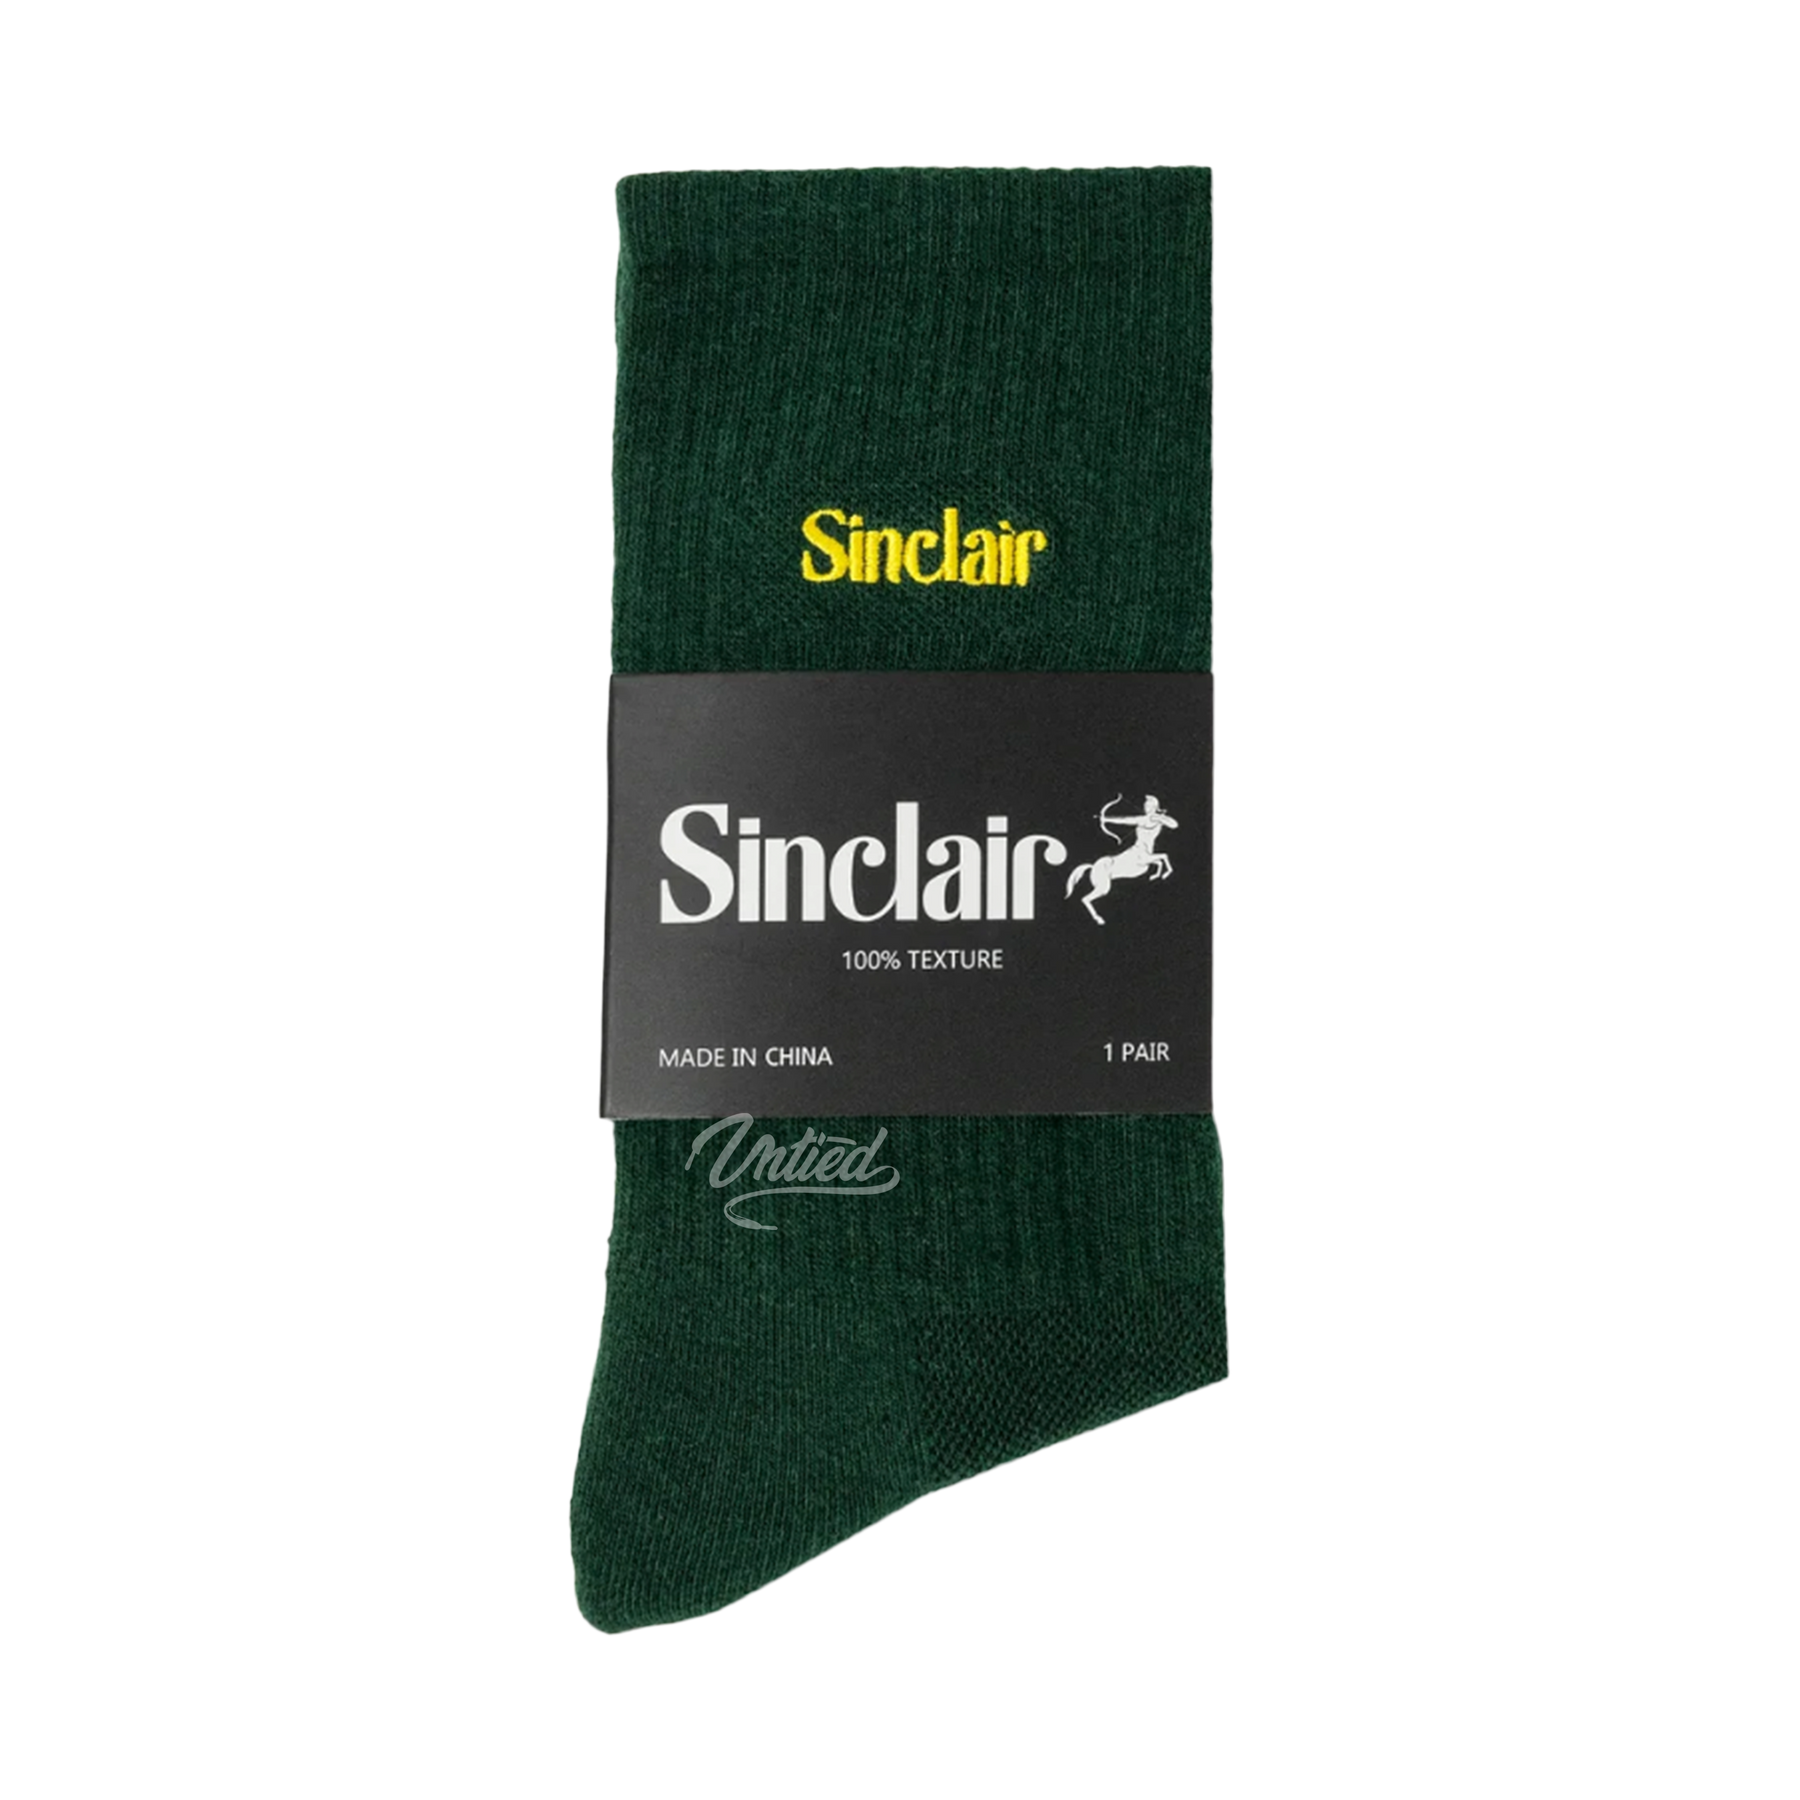 Sinclair Clairssential Socks "Green/Yellow"